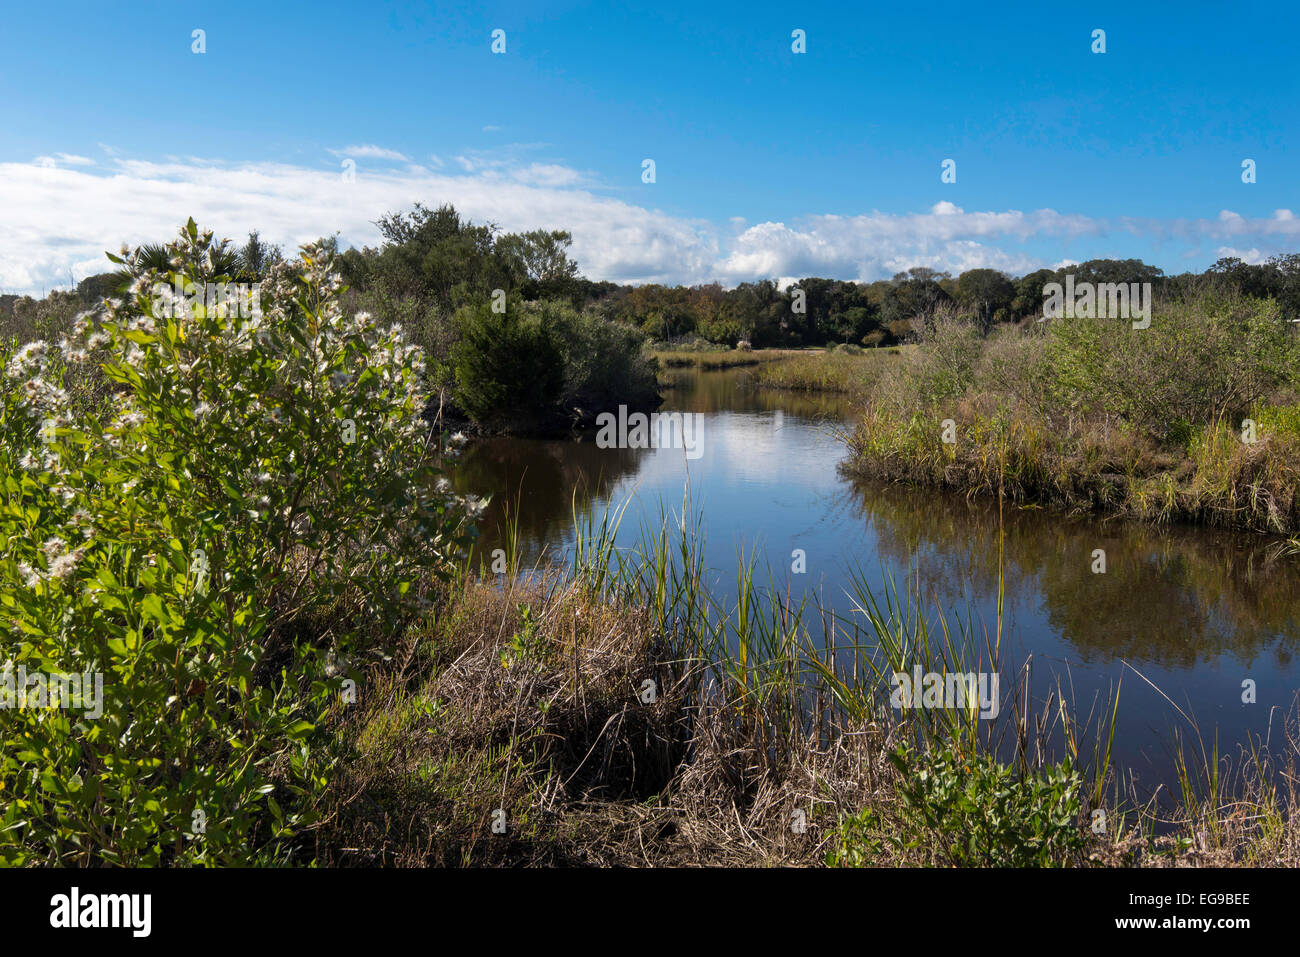 Egan's Creek Greenway in Fernandina, Amelia Island, Florida Stock Photo